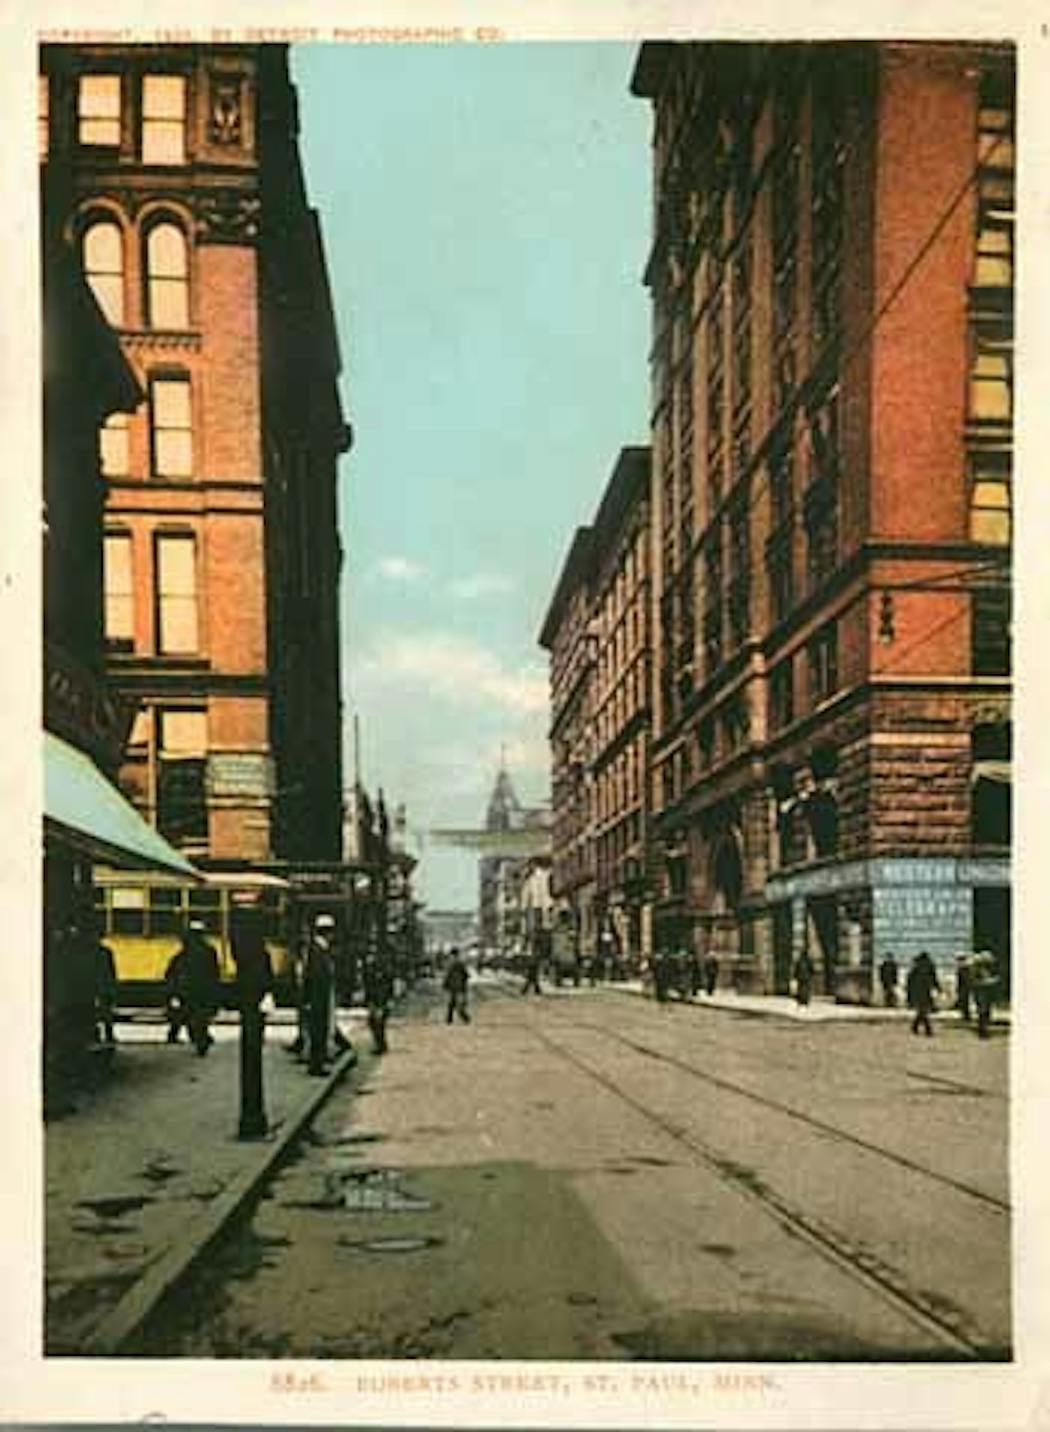 A postcard view of Robert Street in St. Paul.